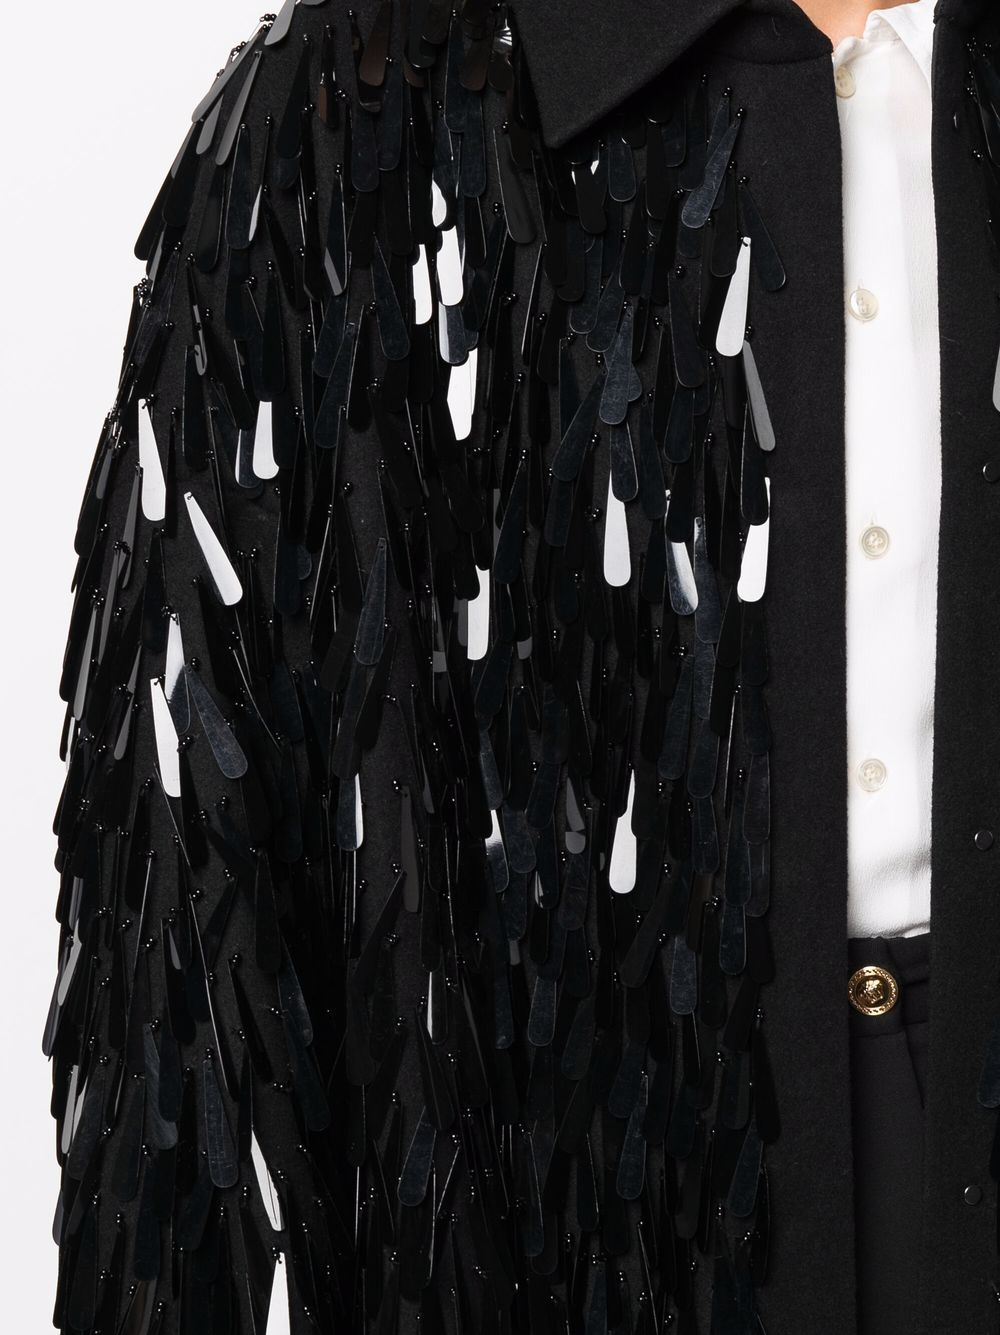 фото Valentino пальто с пайетками